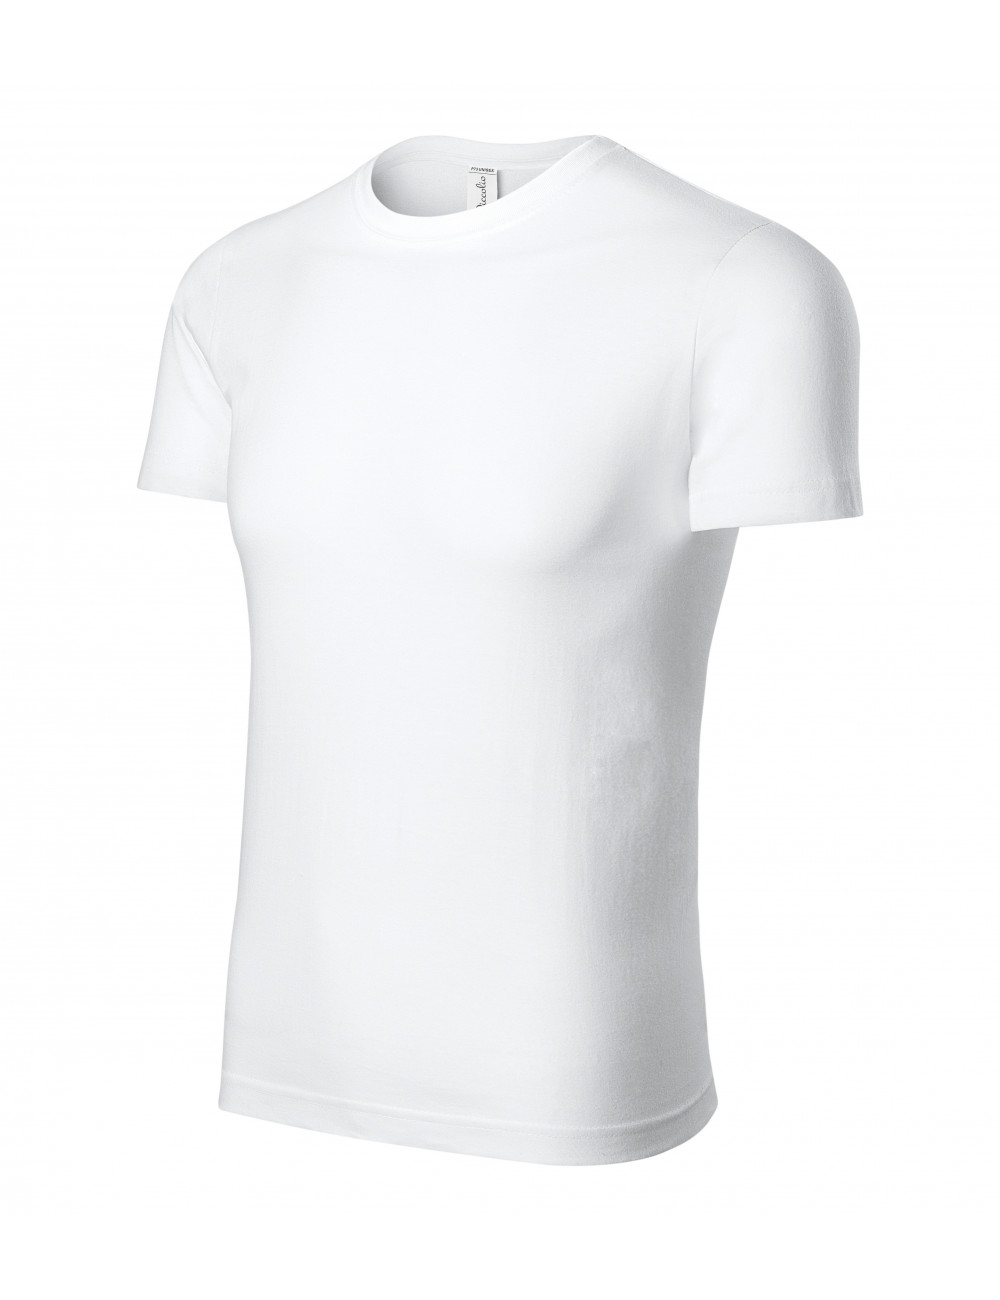 Koszulka unisex paint p73 biały Adler Piccolio